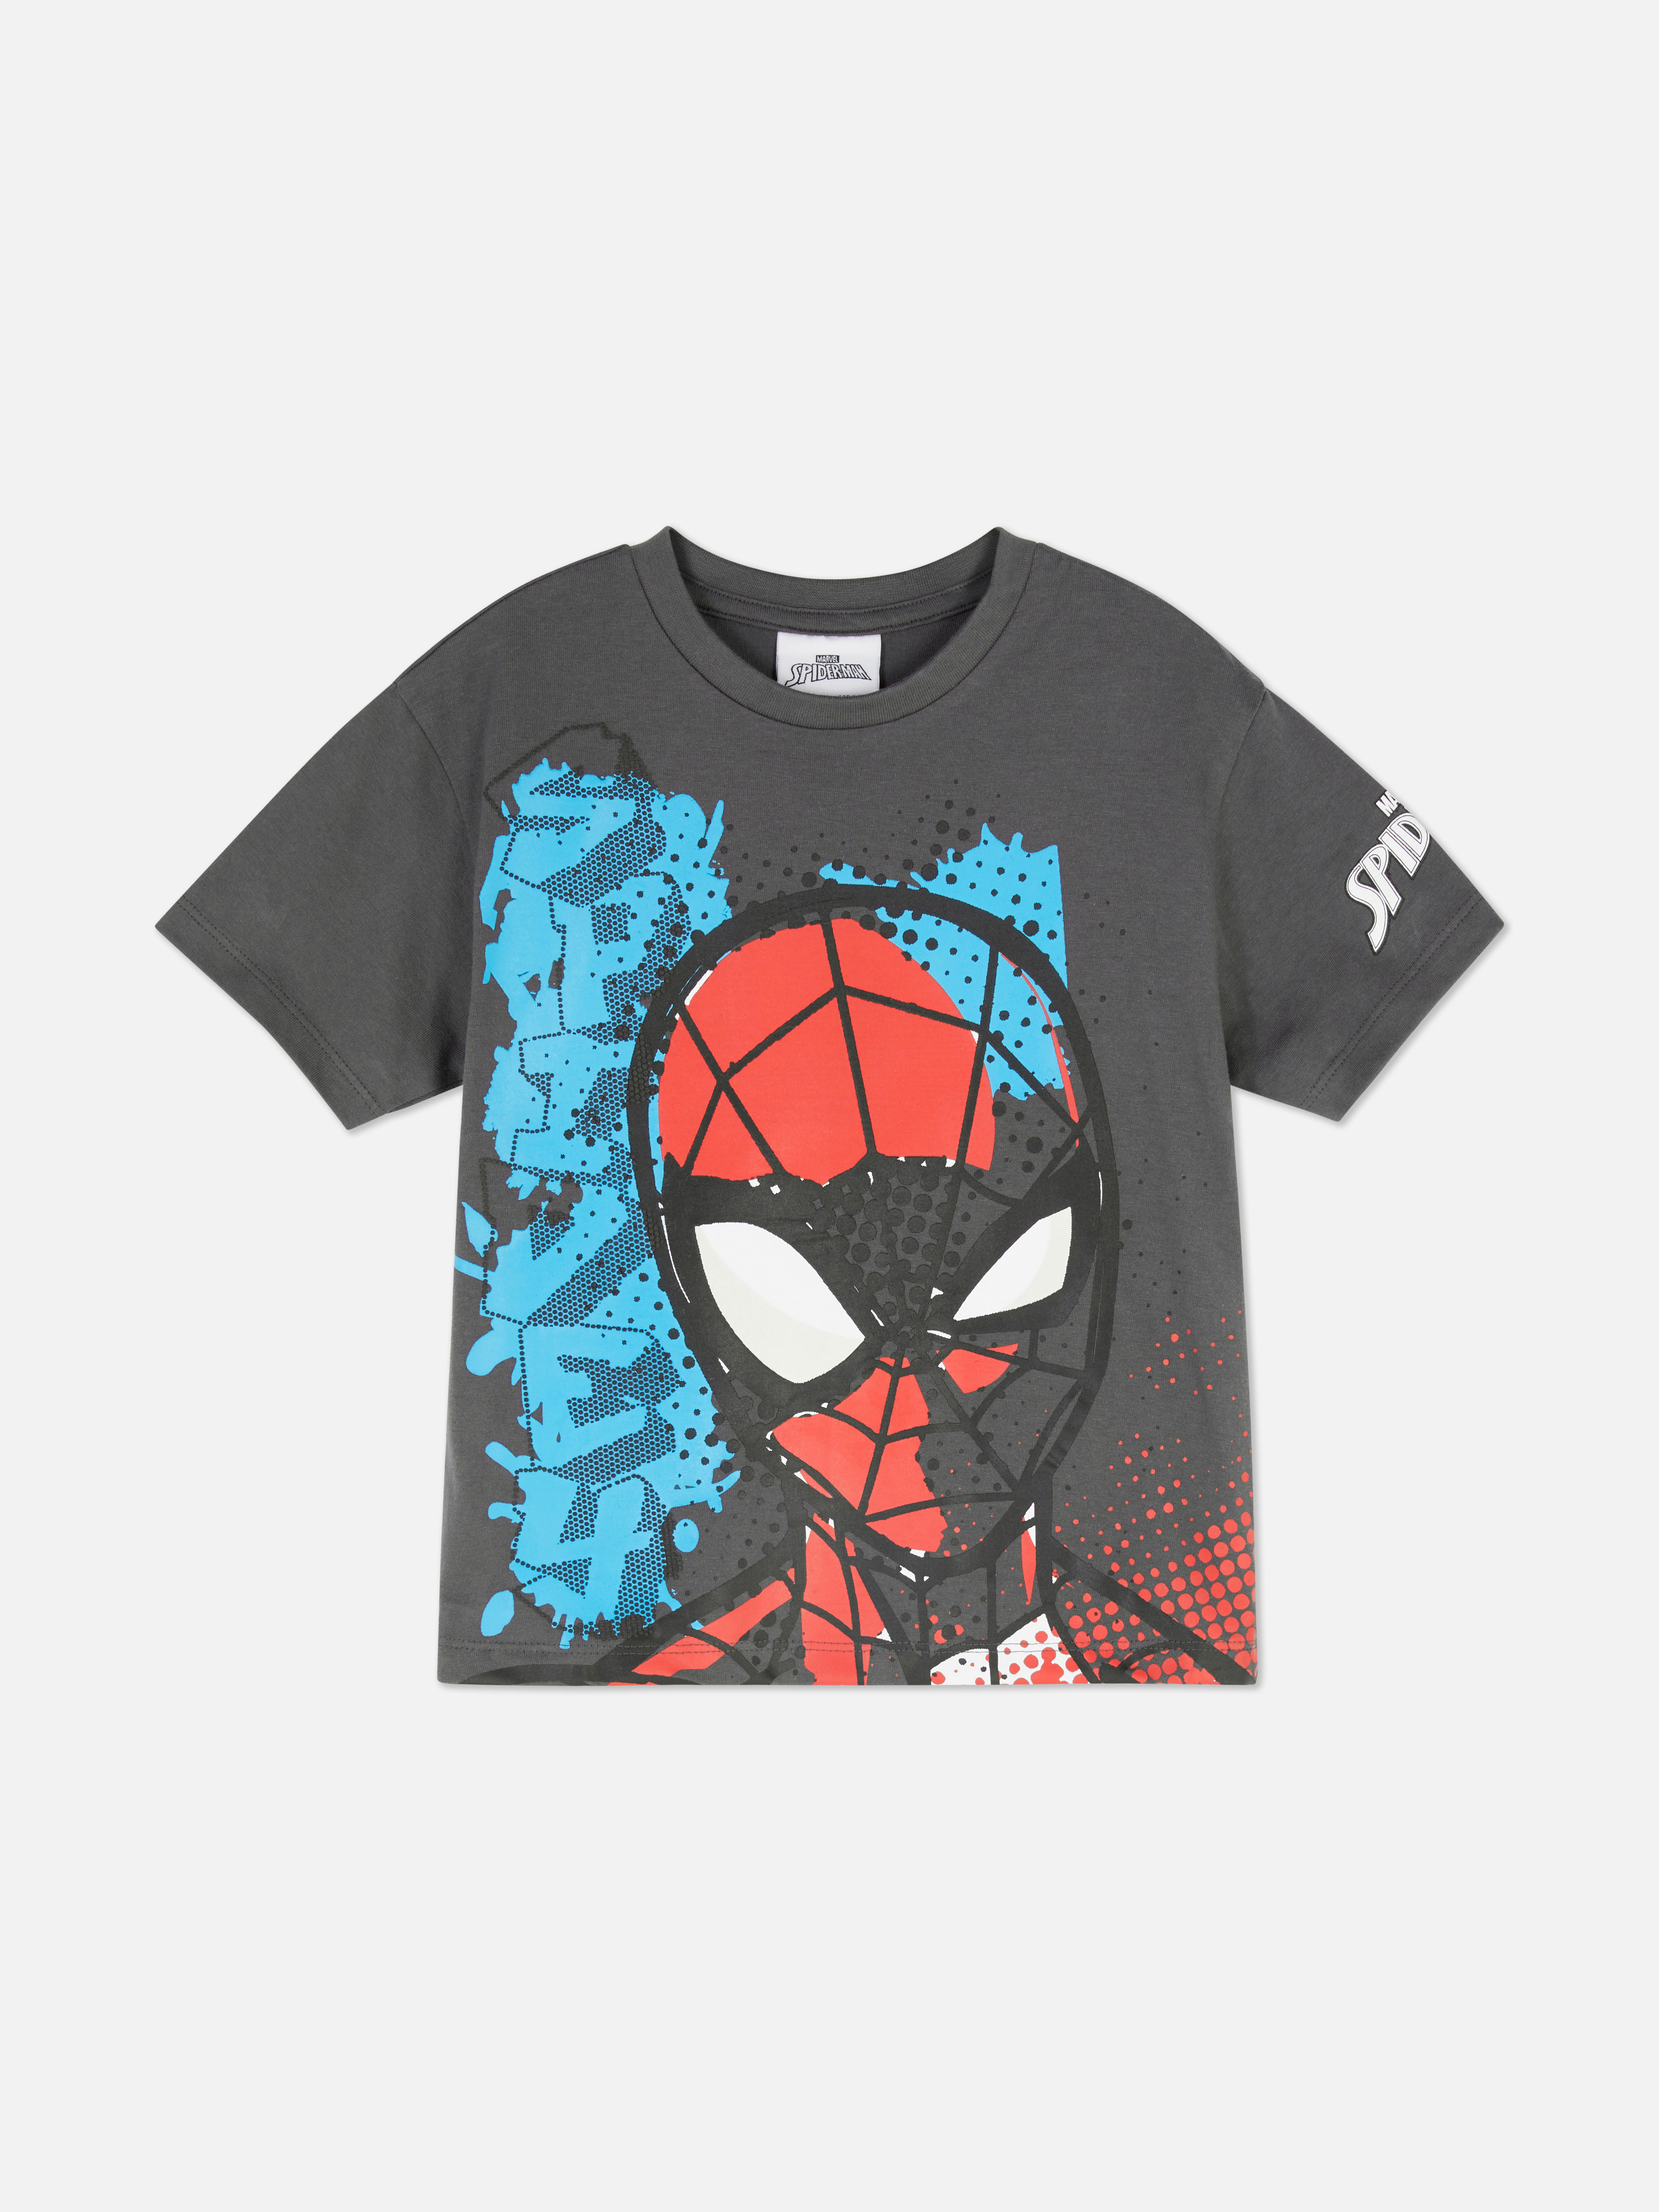 Primark x Marvel Spiderman + Hulk blue sequin Tshirt, Babies